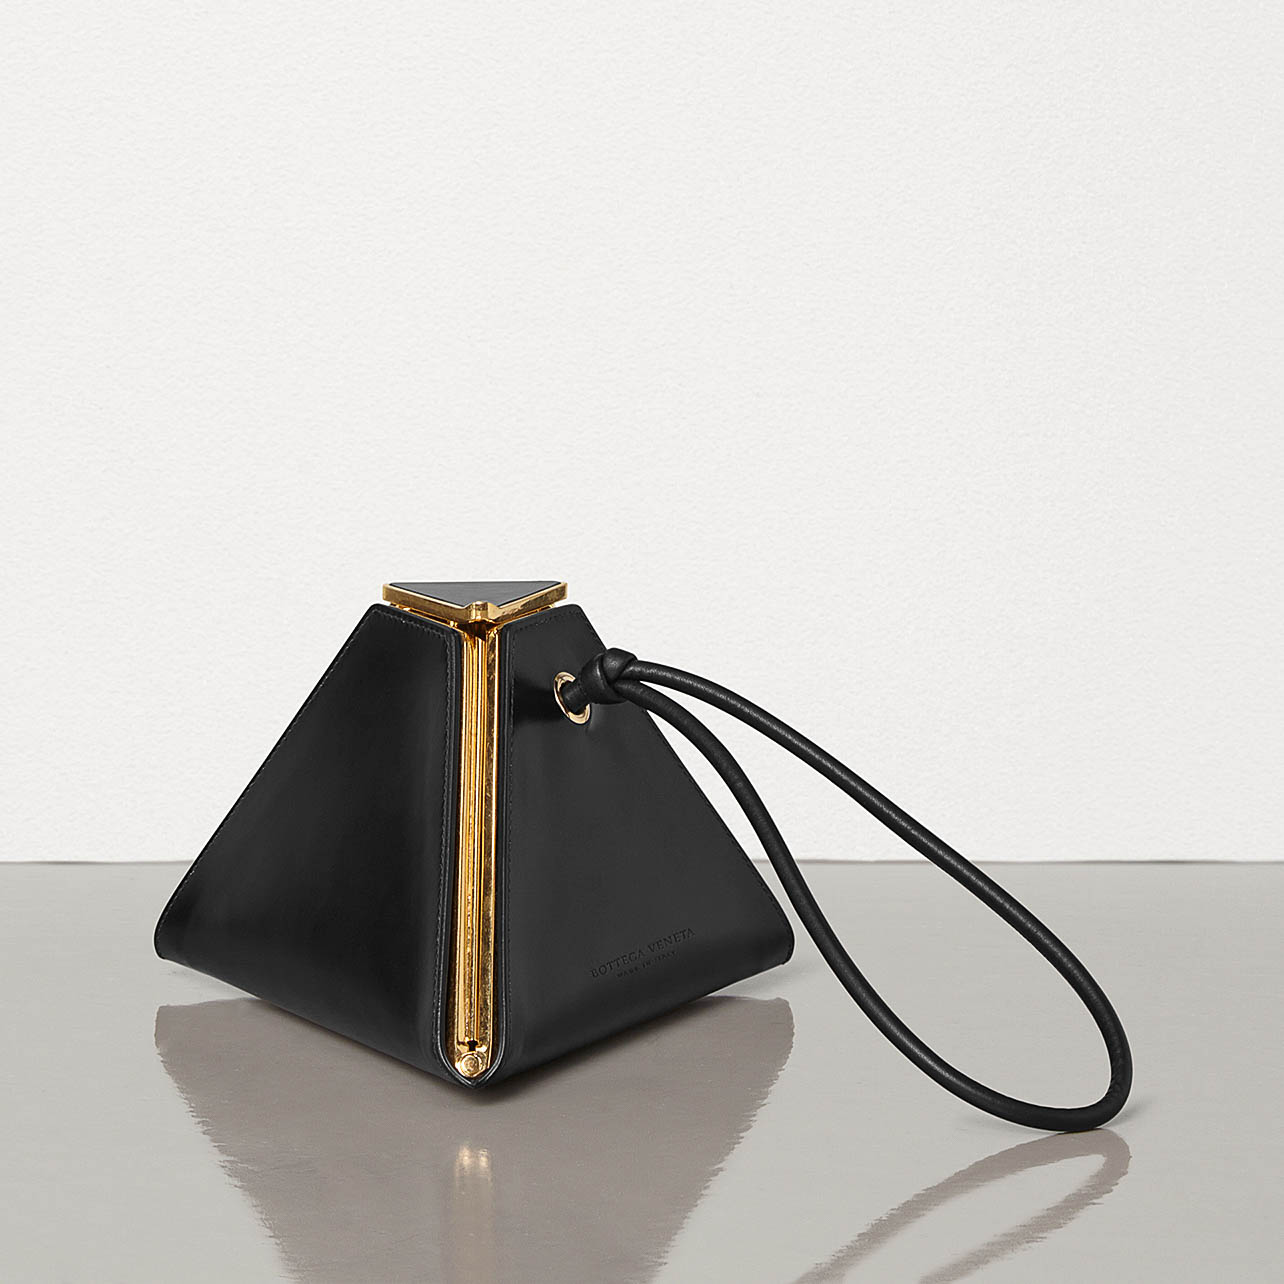 Bottega Veneta Is the Latest Designer to Hop on the Pyramid Bag Trend - PurseBlog